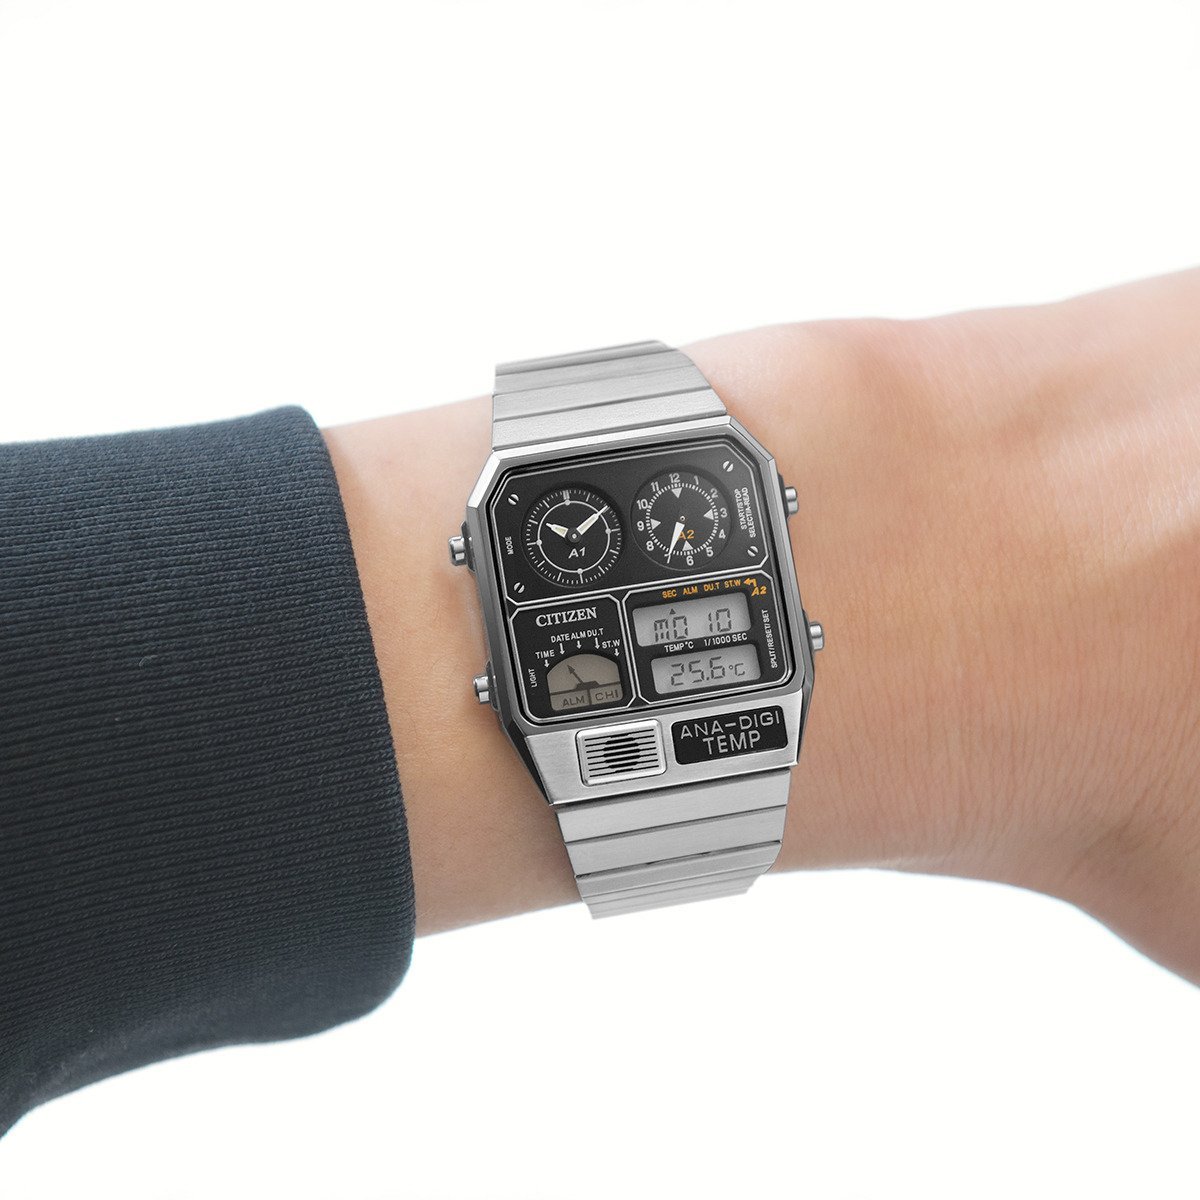 CITIZEN CITIZEN/(M)アナデジテンプ 特定店取扱モデル JG2101-78E シチズン アクセサリー 腕時計 腕時計 シルバー【送料無料】